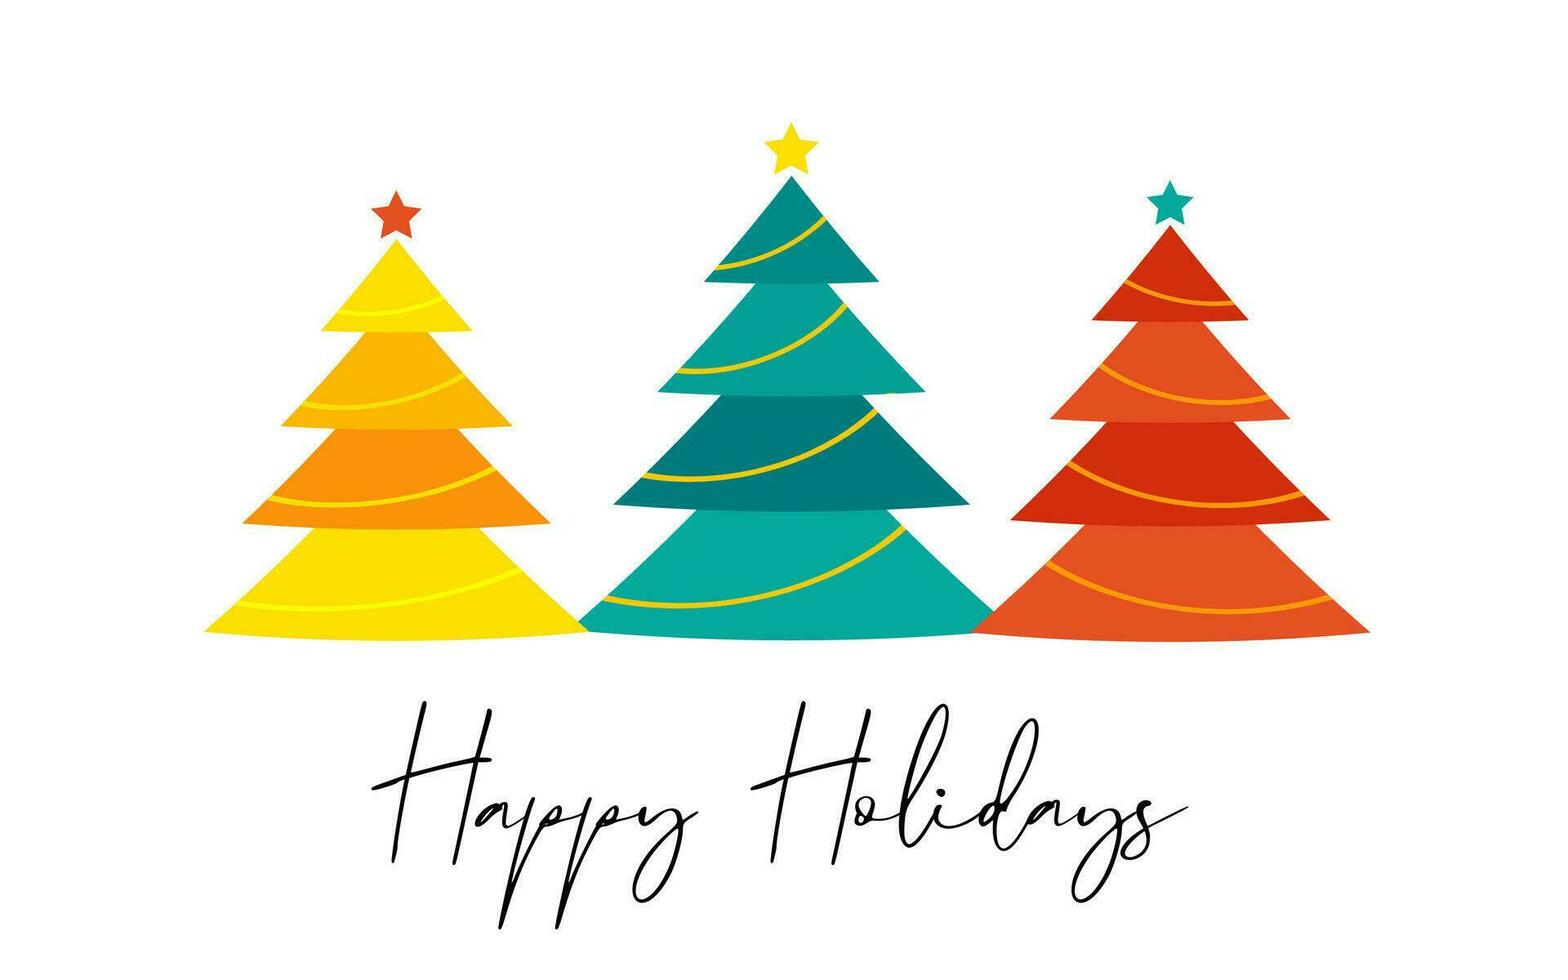 Happy Holidays, xmas card with creative Christmas trees. Modern design vector